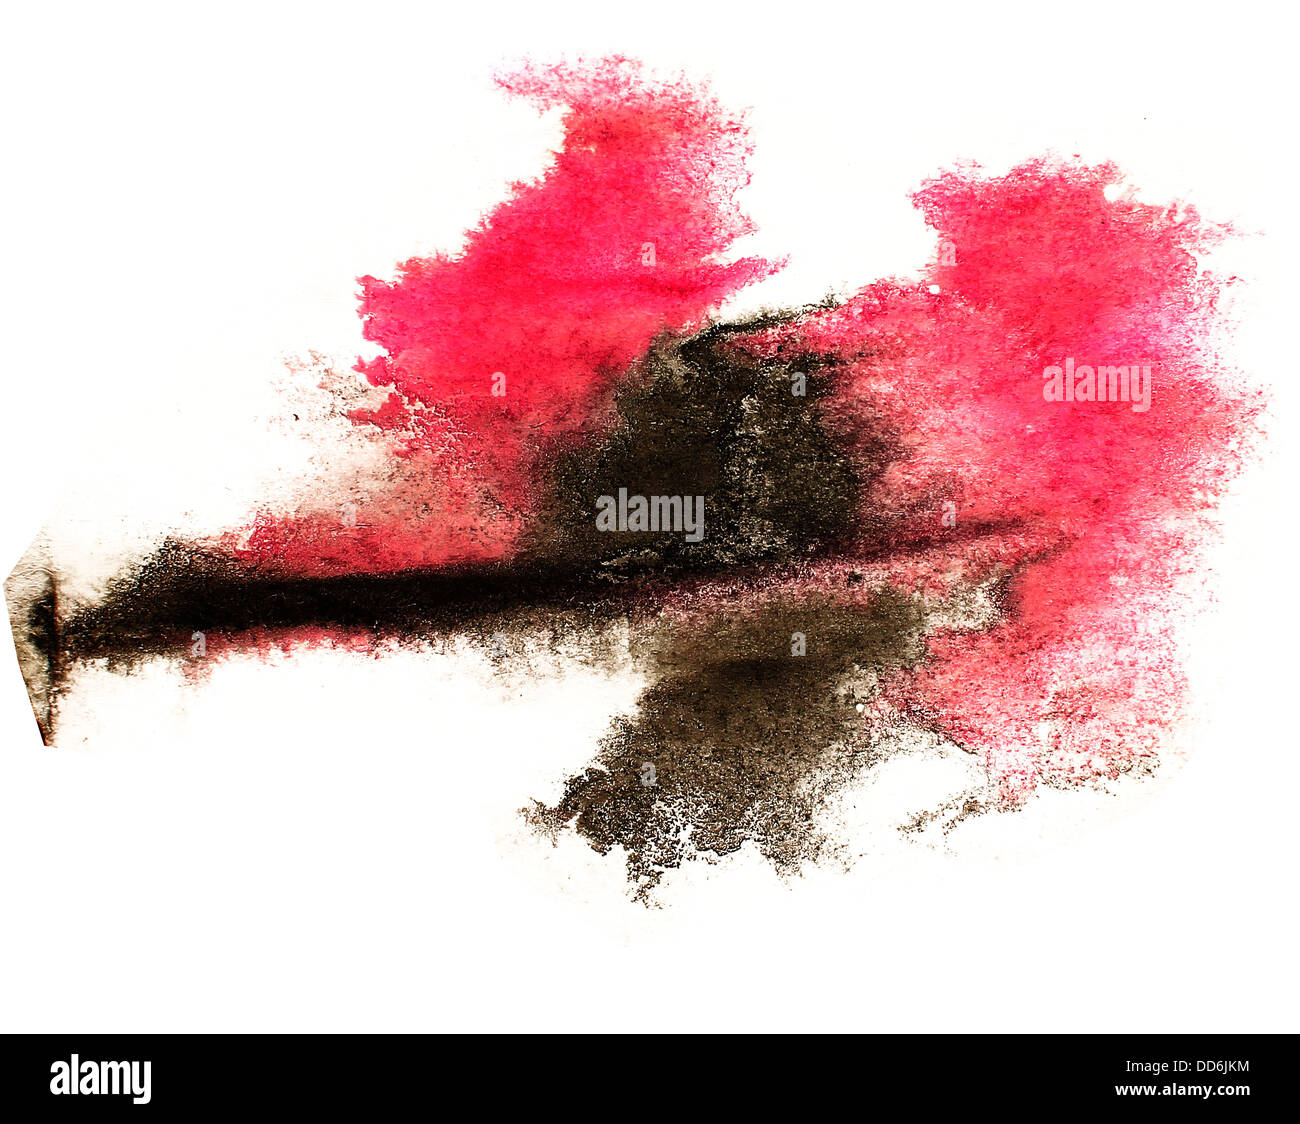 Ink Red, Black Watercolor Paint Splatter Splash Grunge Background Blot Abstract Texture Splat Art Spray Stock Photo - Alamy